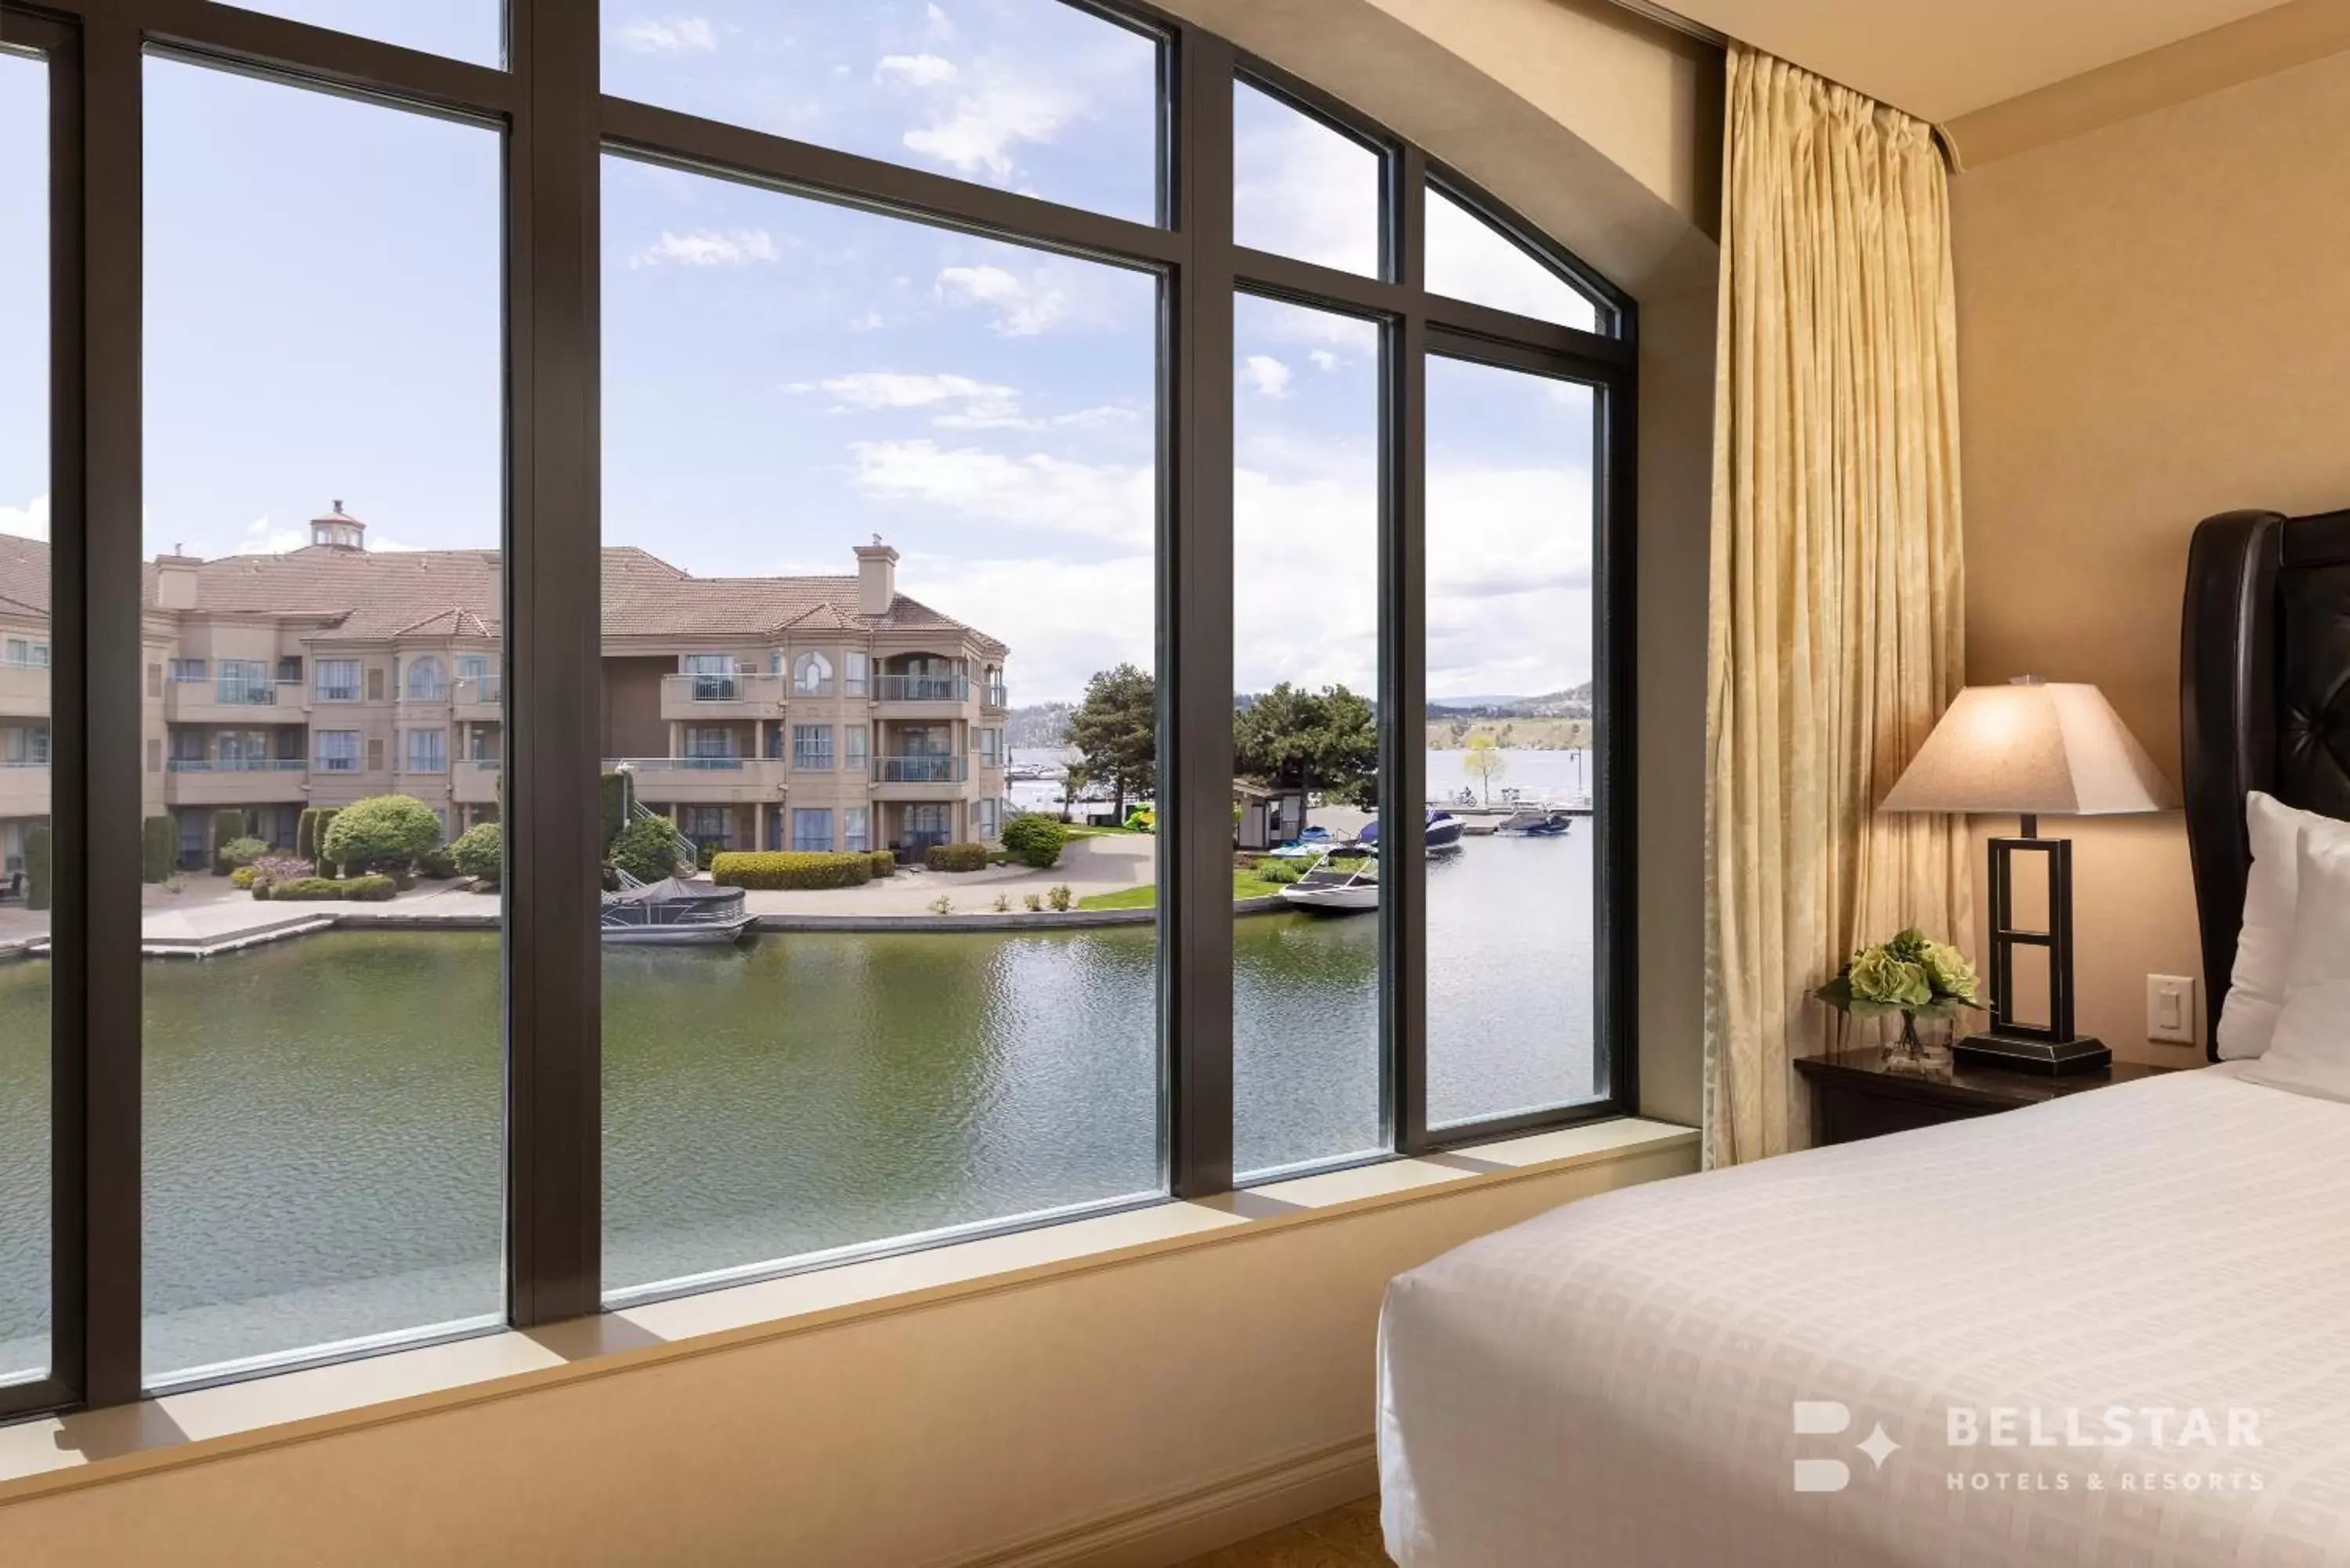 Bedroom in The Royal Kelowna - Bellstar Hotels & Resorts